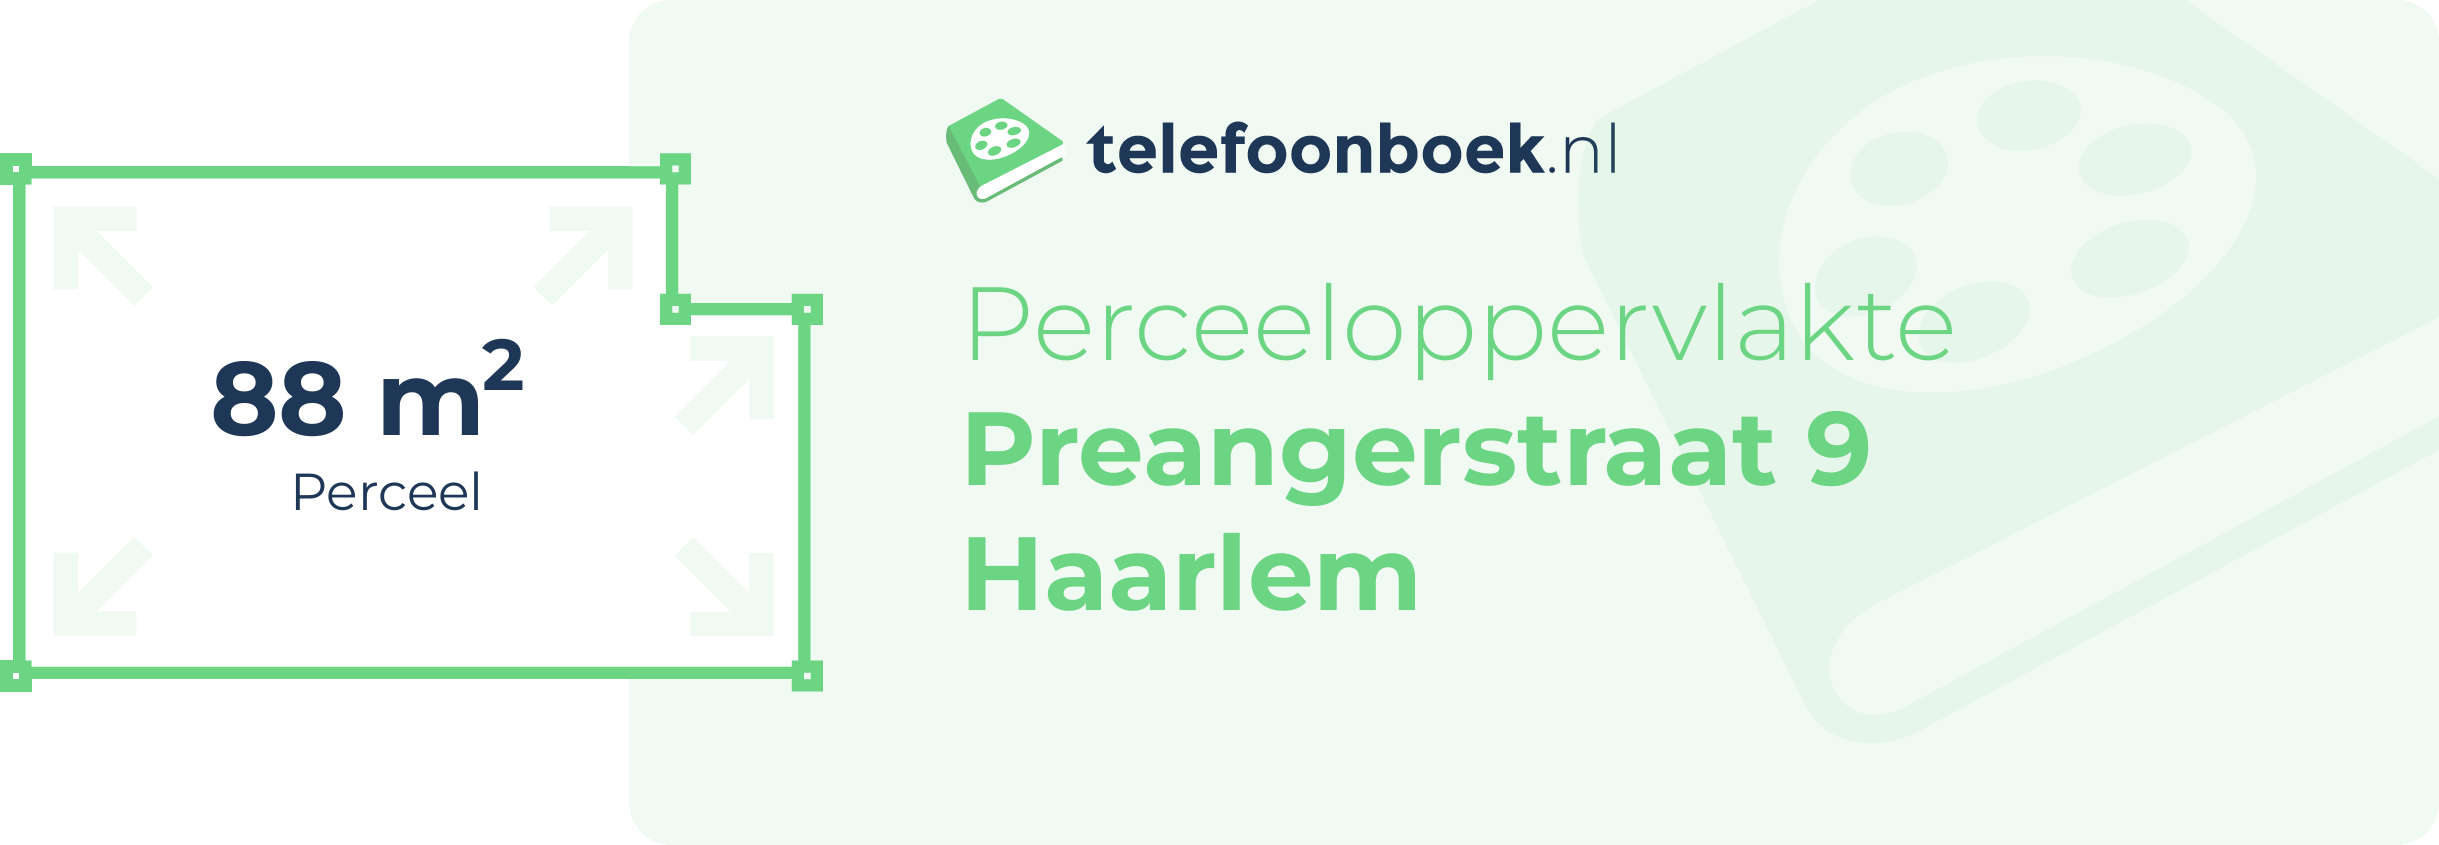 Perceeloppervlakte Preangerstraat 9 Haarlem